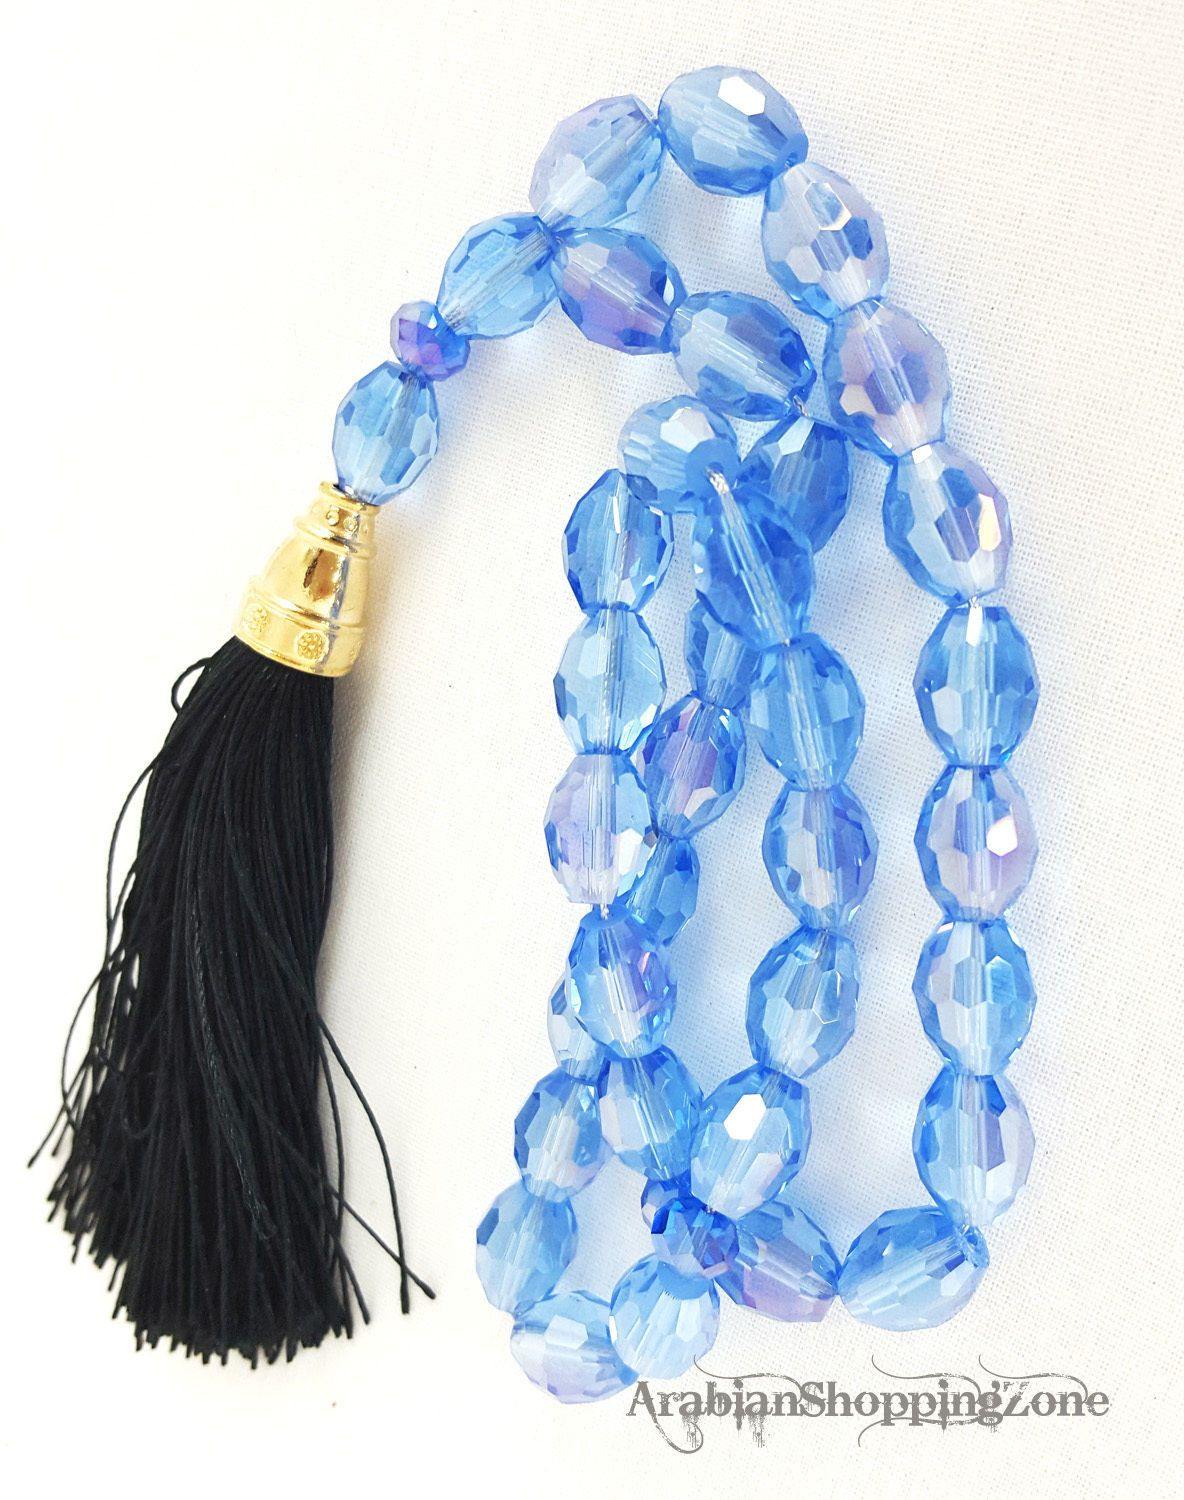 Islamic Salah 12mm Sapphire Crystal Prayer Beads 33 Mesbaha - Arabian Shopping Zone